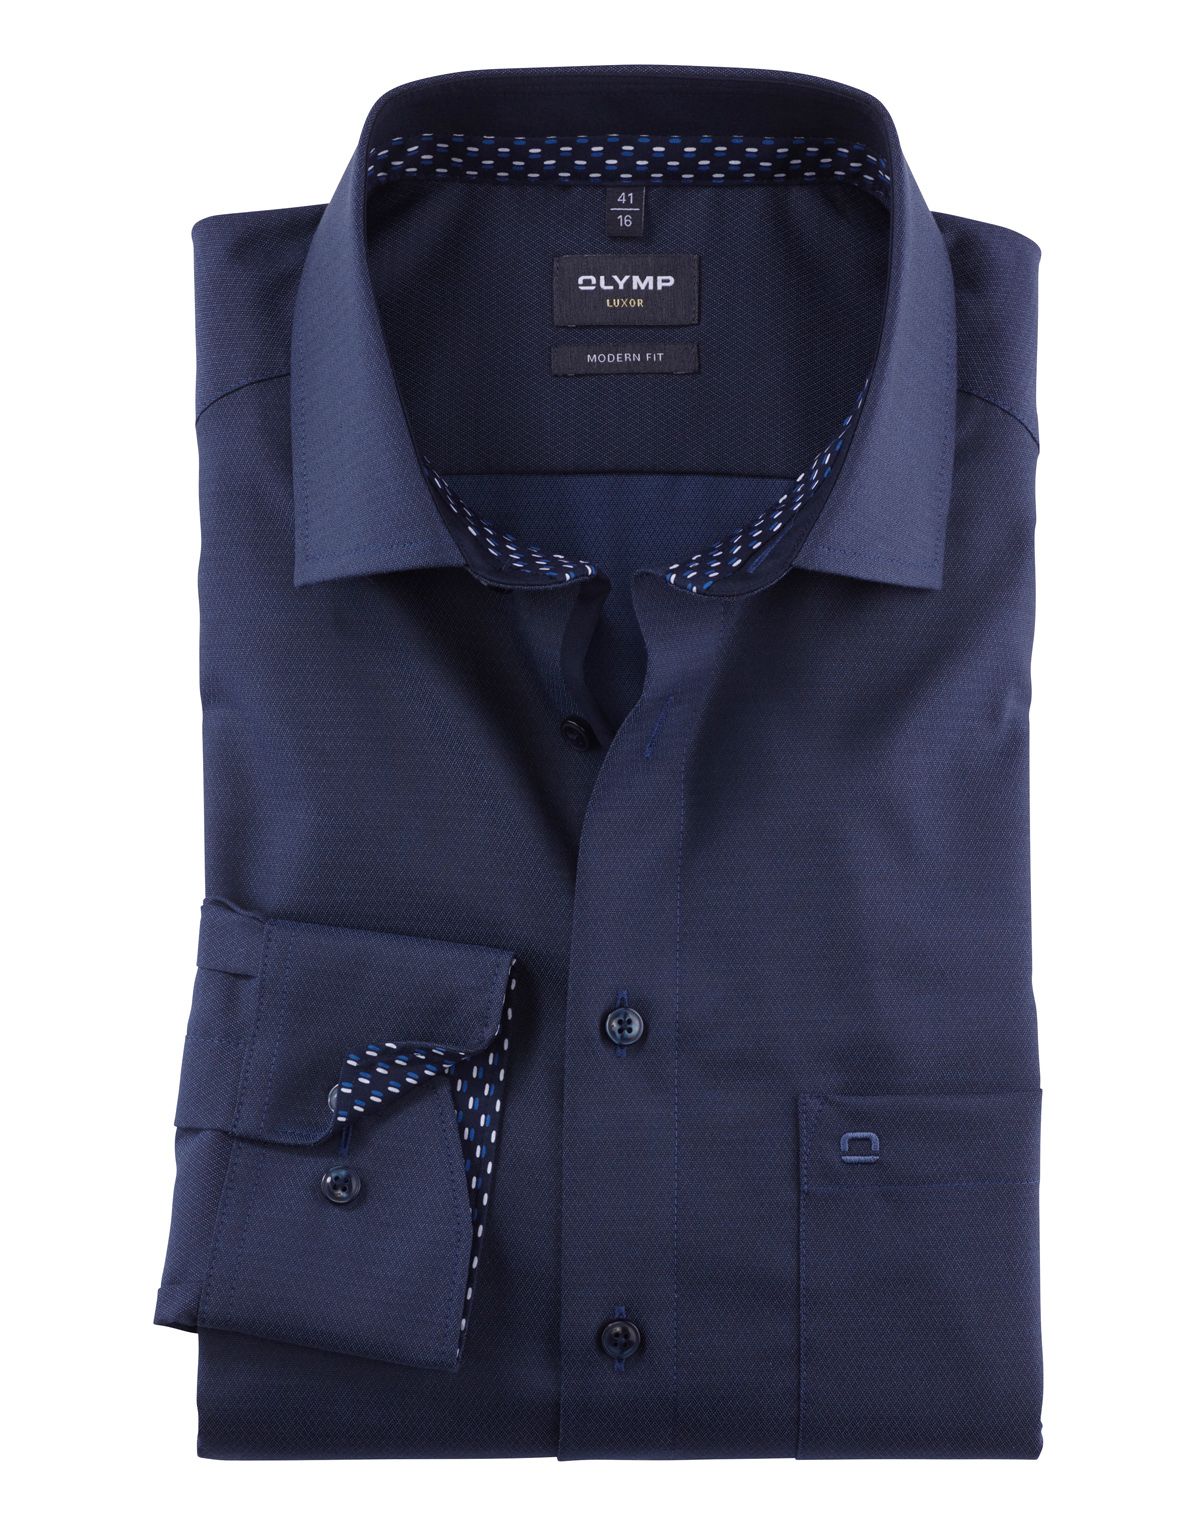 Рубашка мужская OLYMP Luxor, modern fit, фактурная ткань, рост до 176[СИНИЙ]